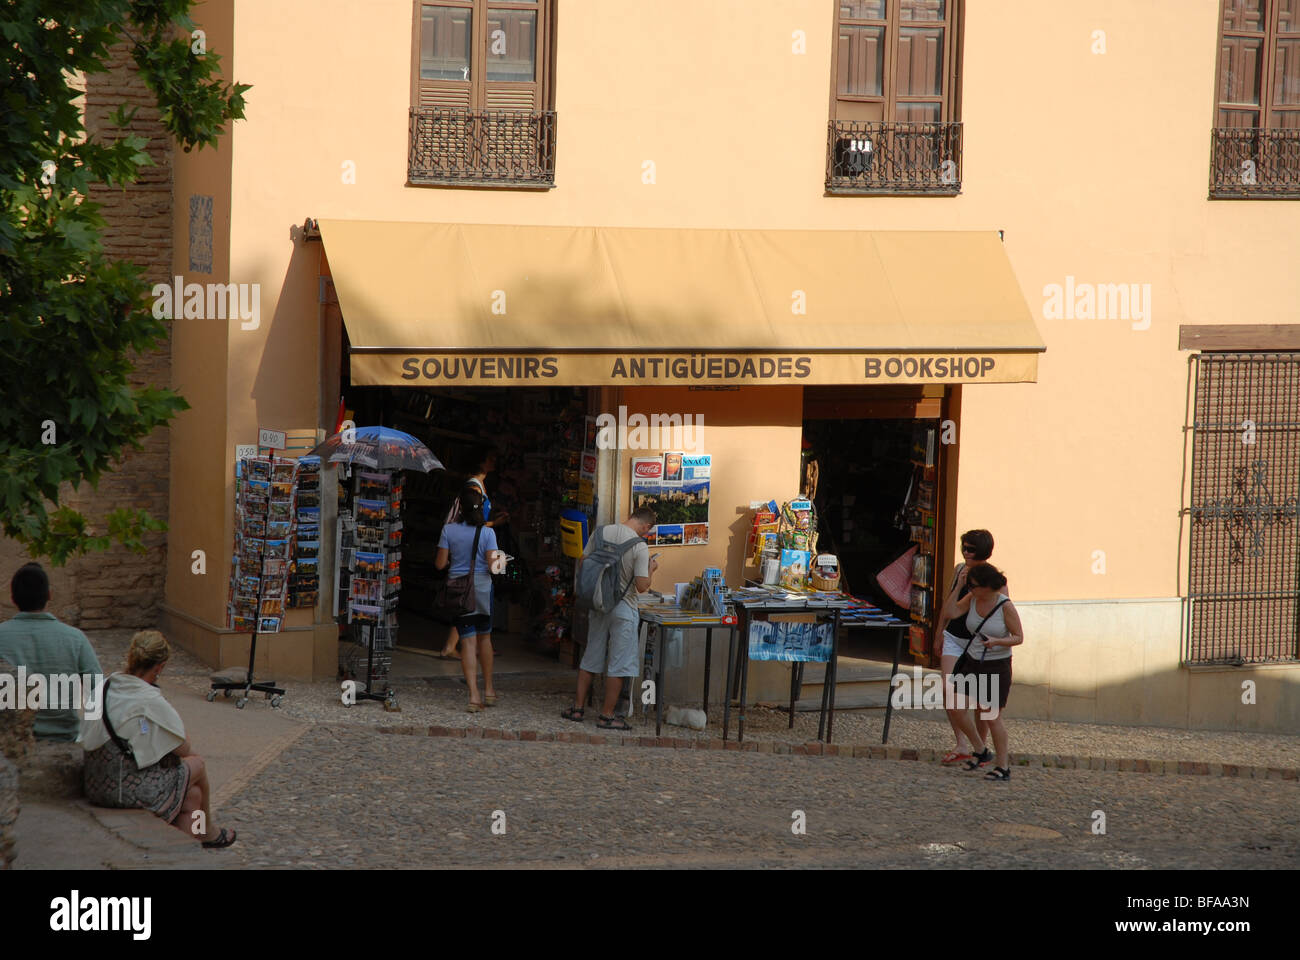 souvenir & bookshop near The Wine Gate, The Alhambra Palace, Granada, Andalusia, Spain Stock Photo